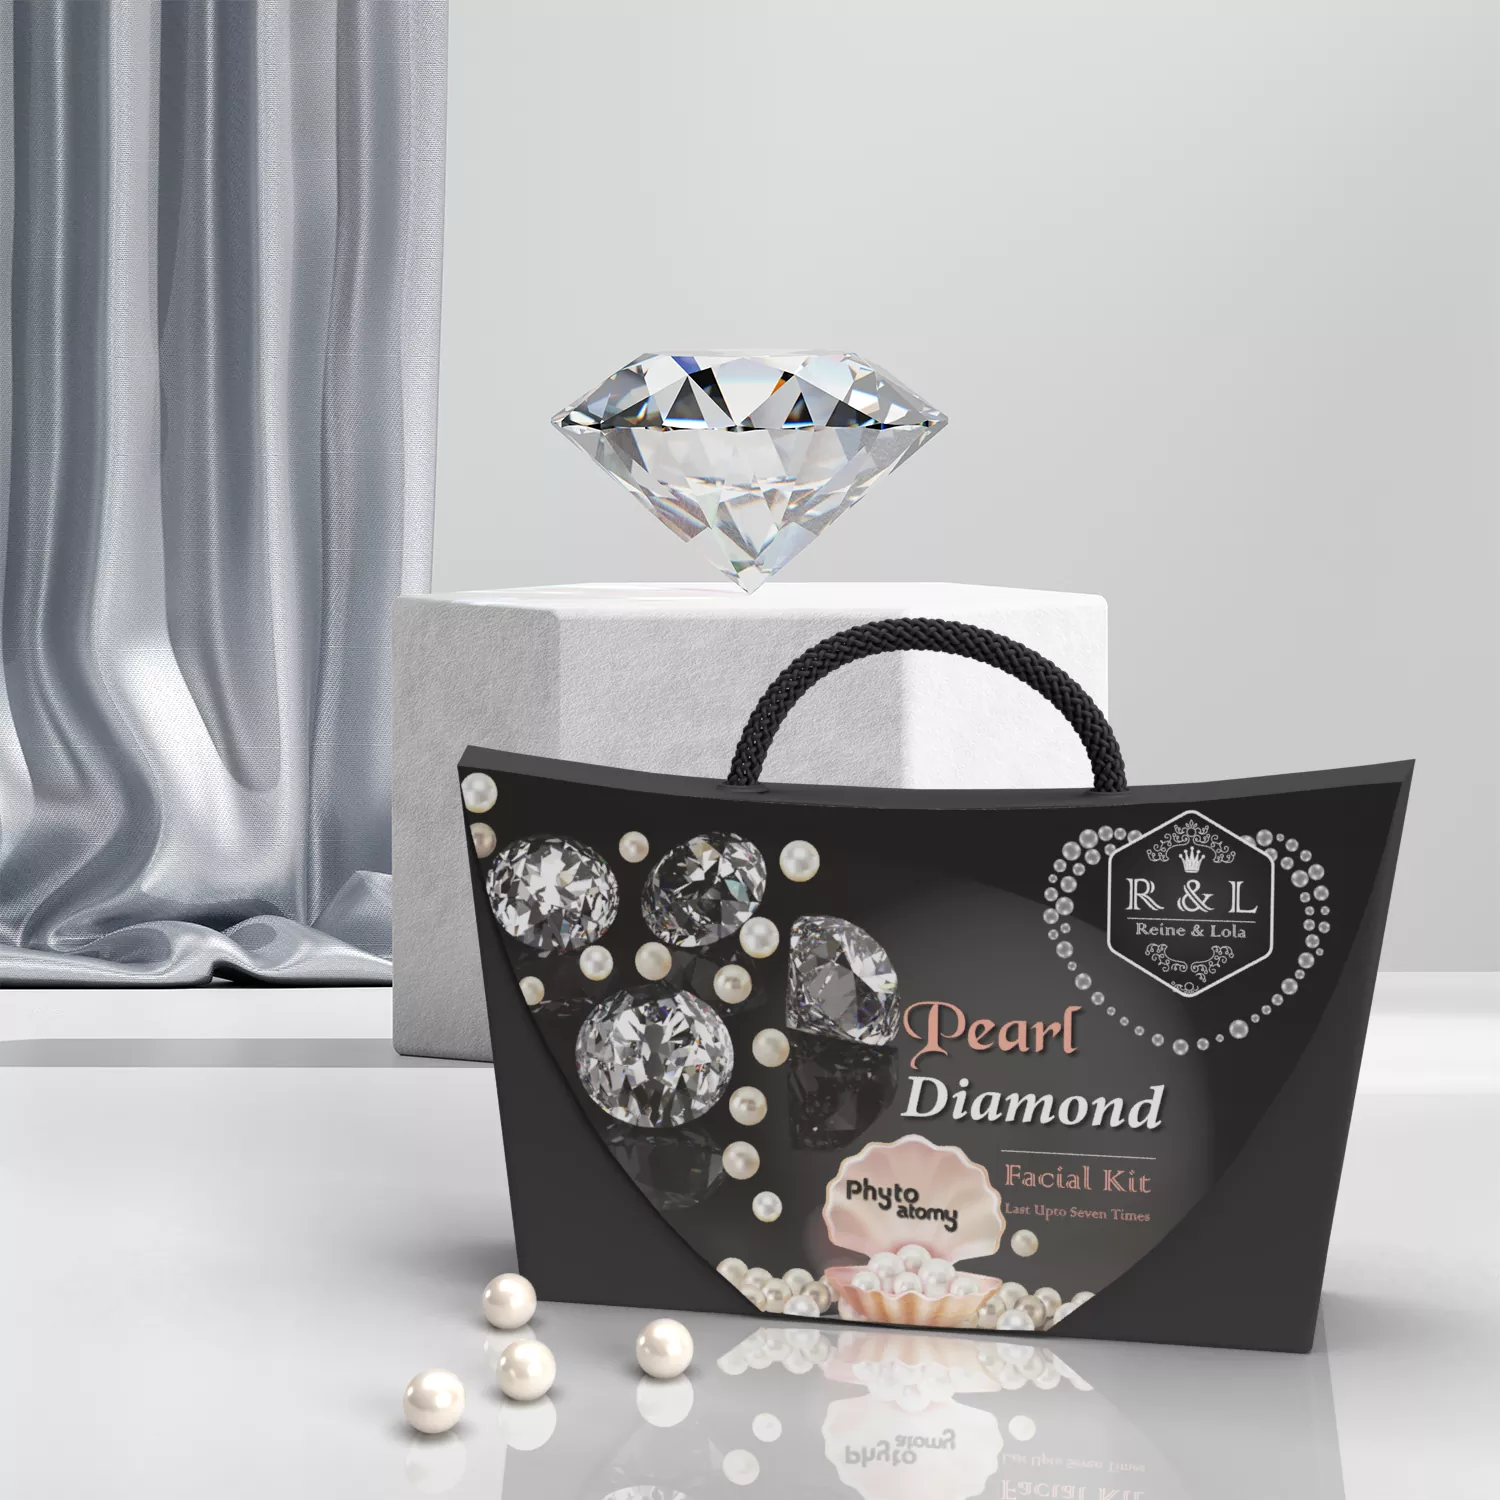 R & L Pearl Diamond Facial Kit